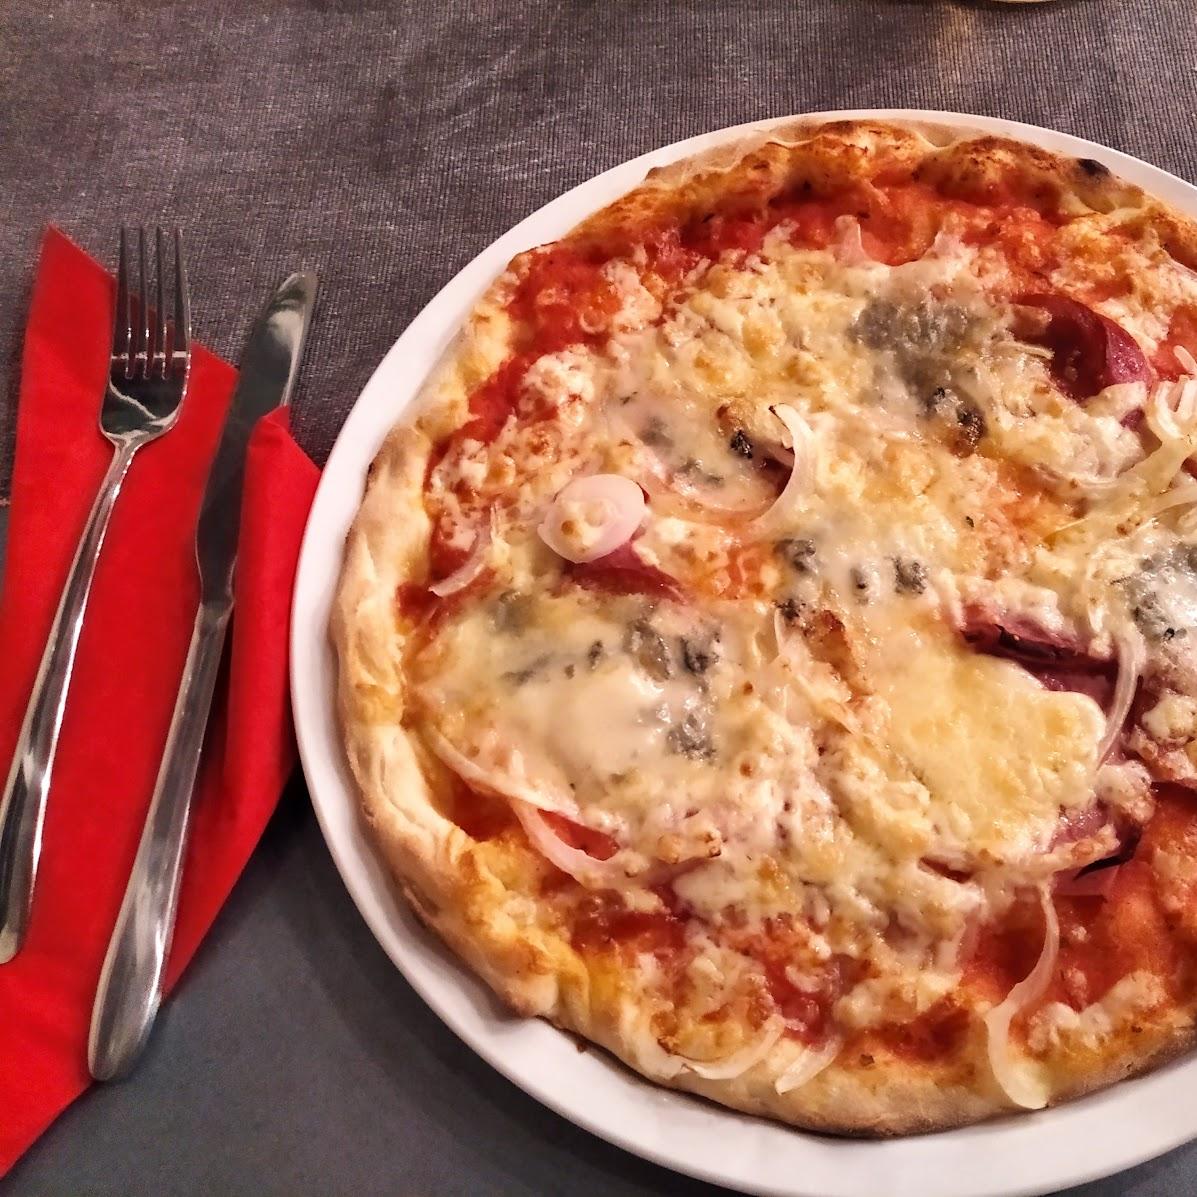 Restaurant "Pizzeria Toscana Anzefahr" in Kirchhain